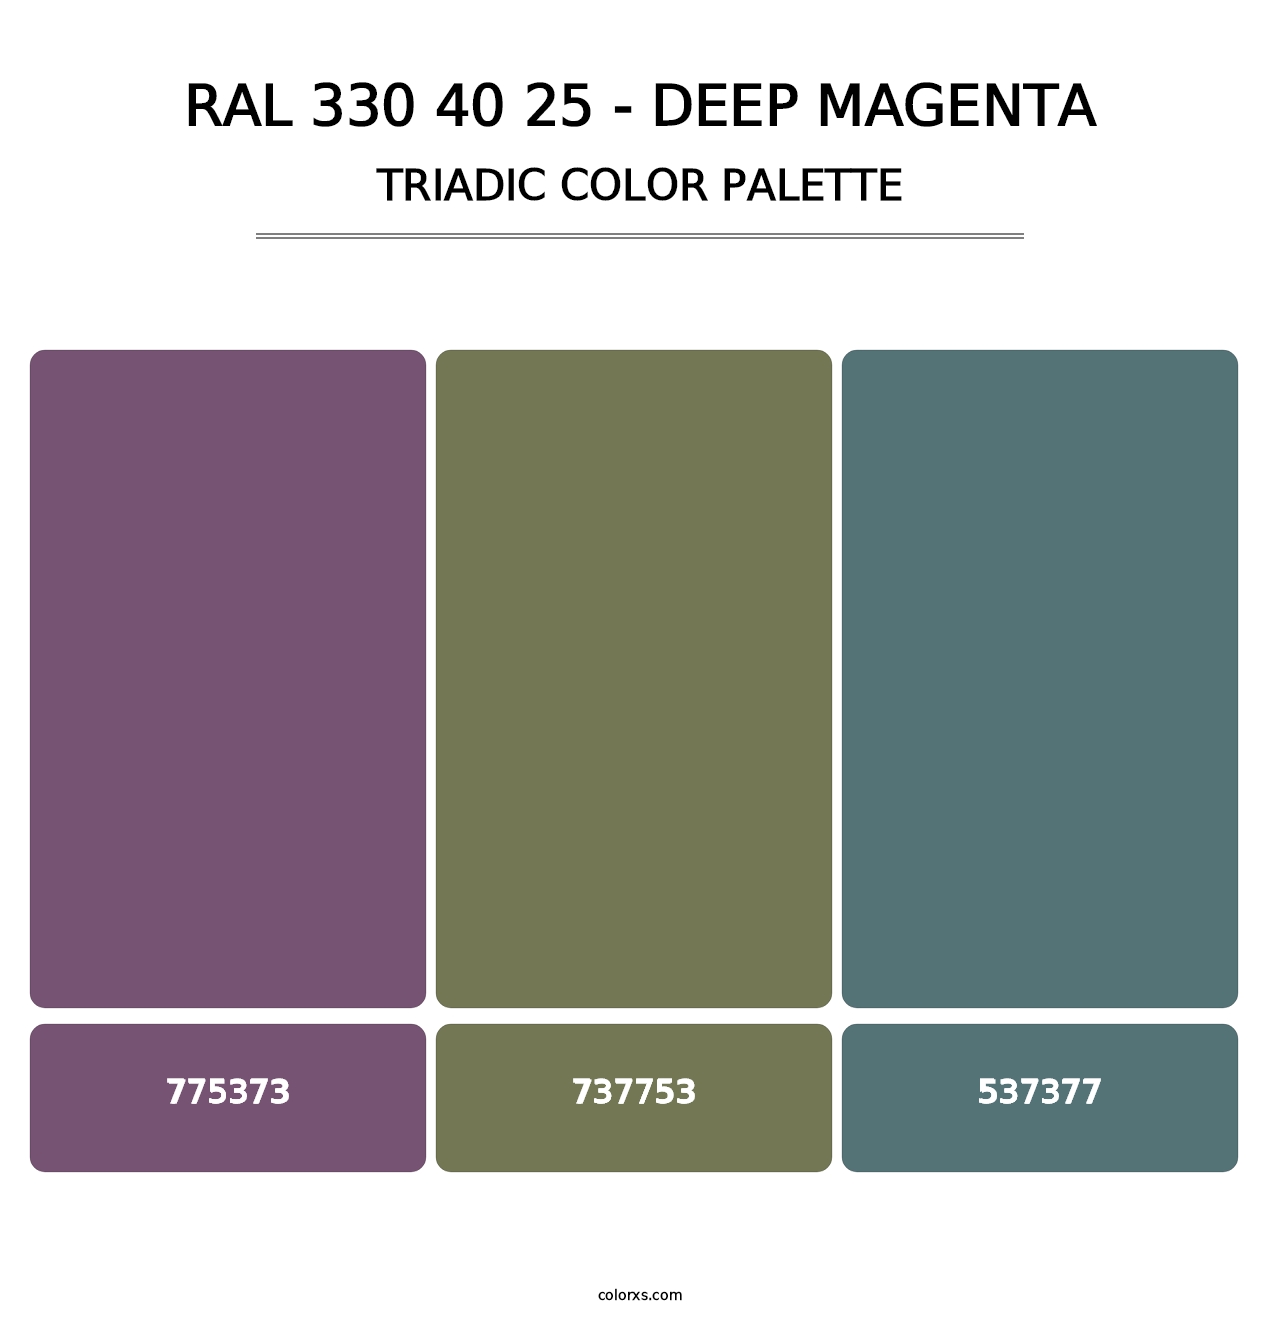 RAL 330 40 25 - Deep Magenta - Triadic Color Palette